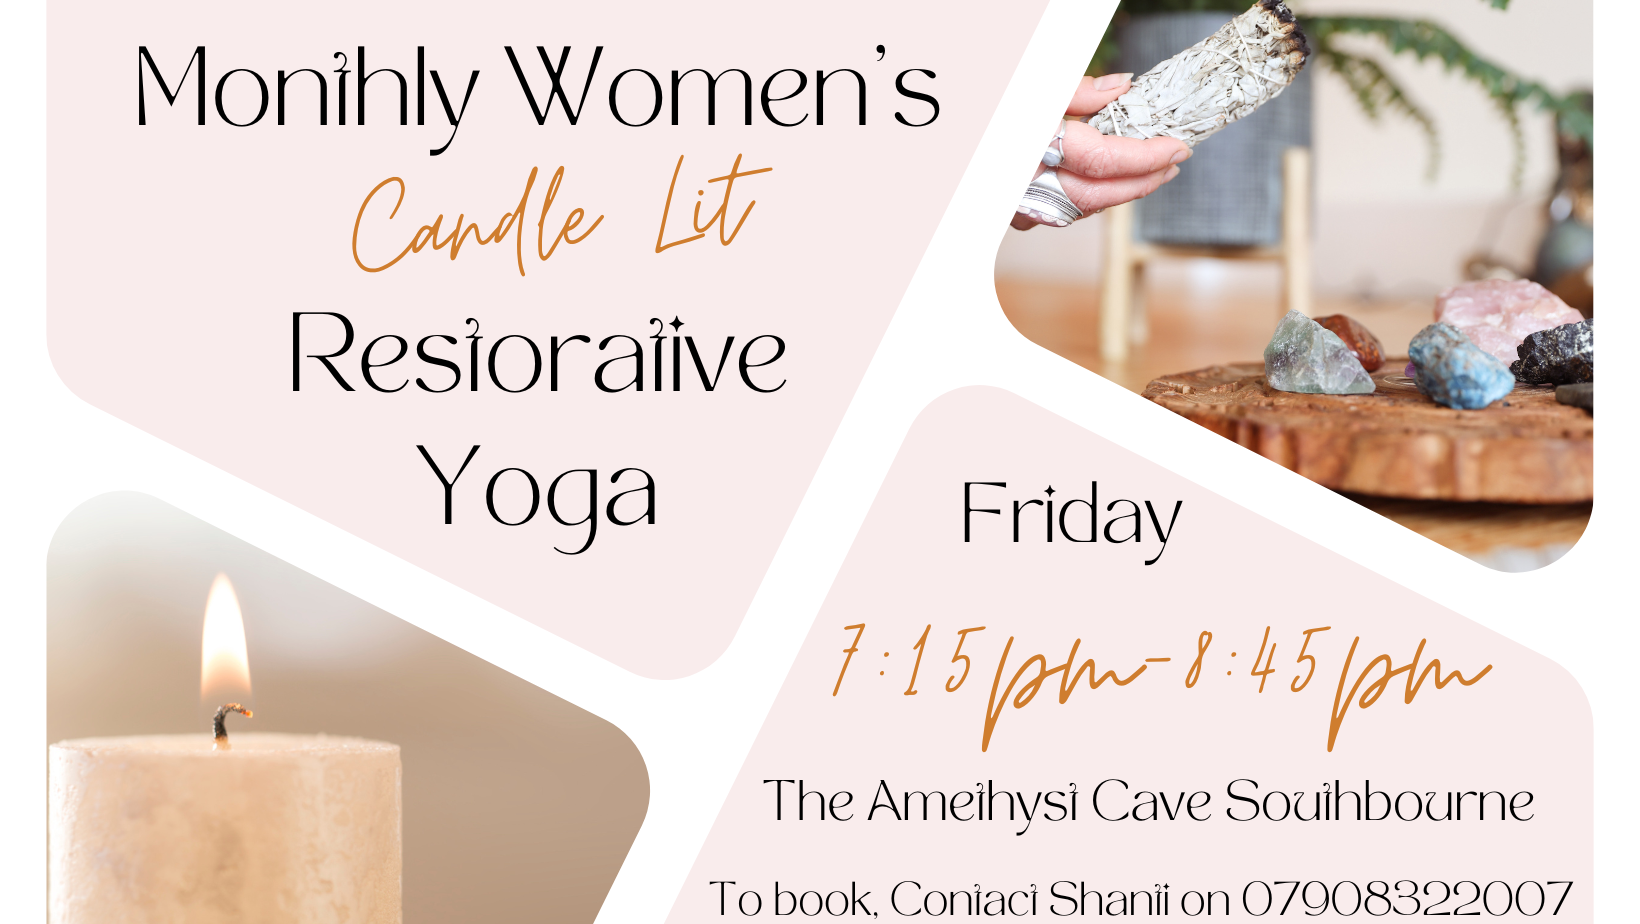 Women’s Candle Lit Restorative Yoga